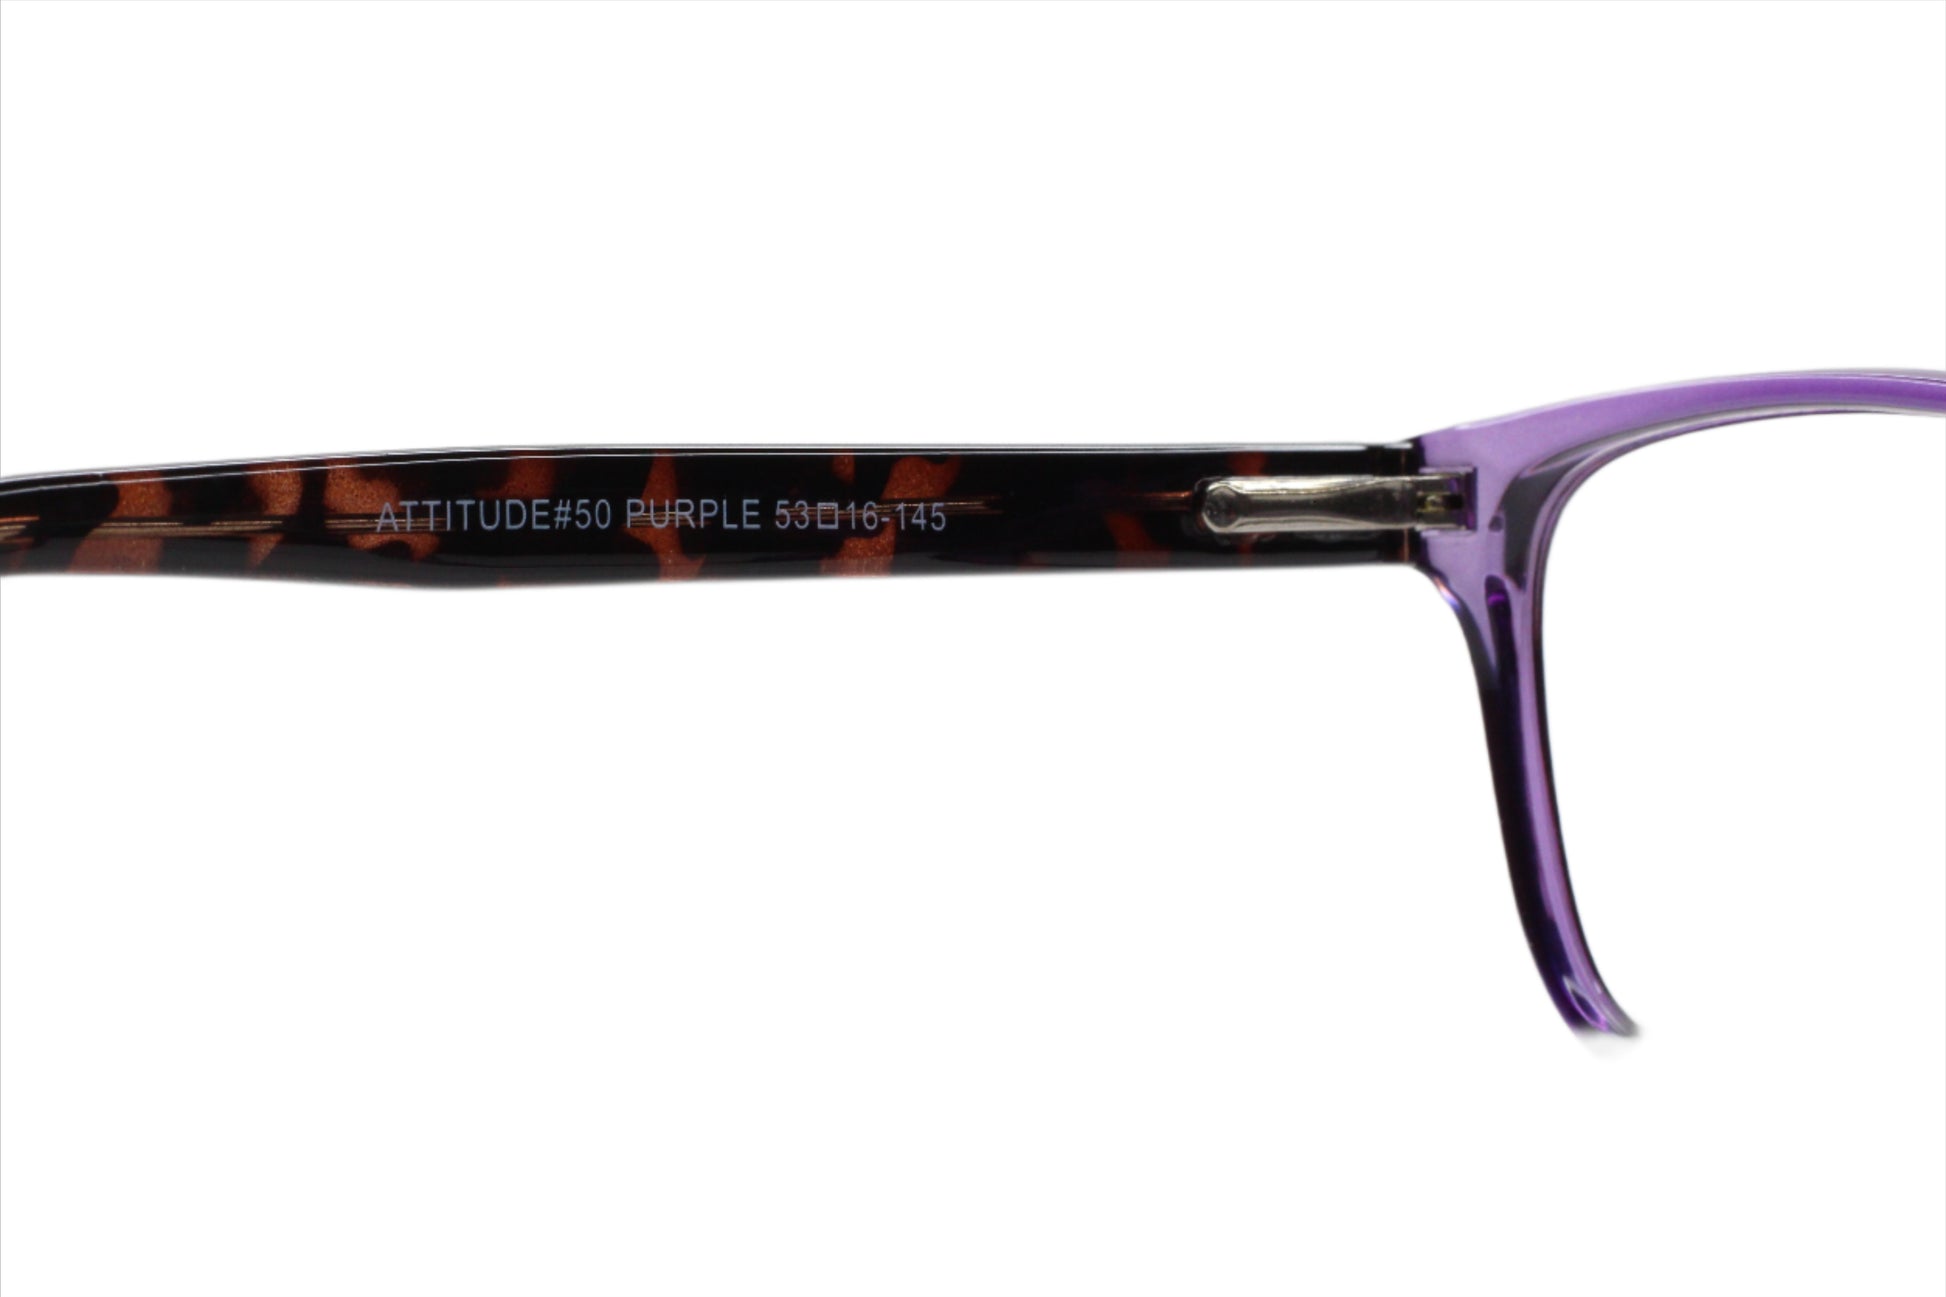 Attitudes Crystal Purple Acetate Designer Eyeglasses